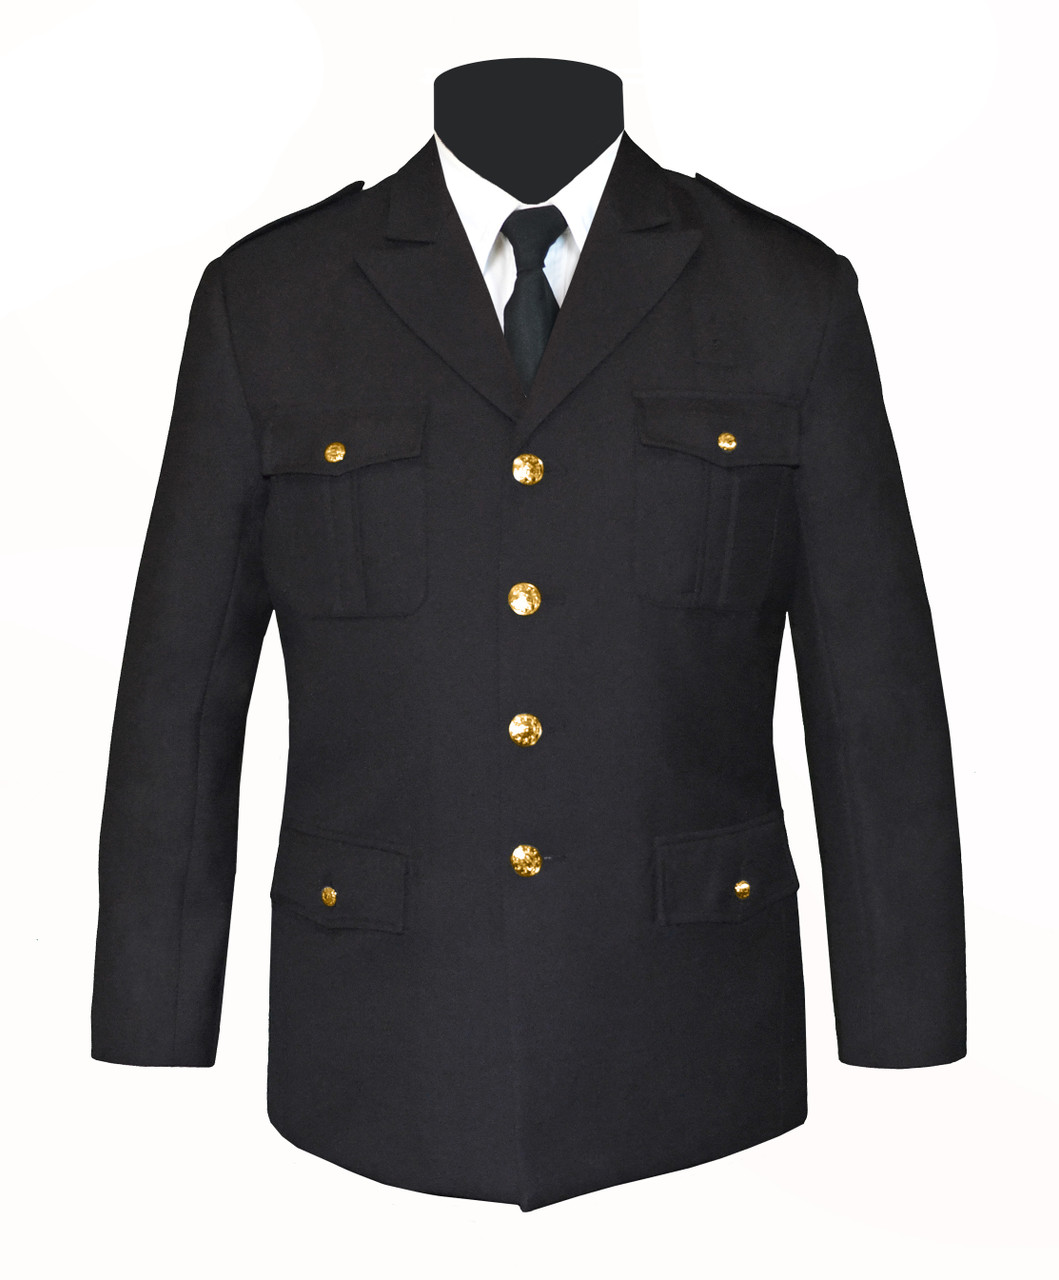 Police Uniform | J. Higgins, Ltd.